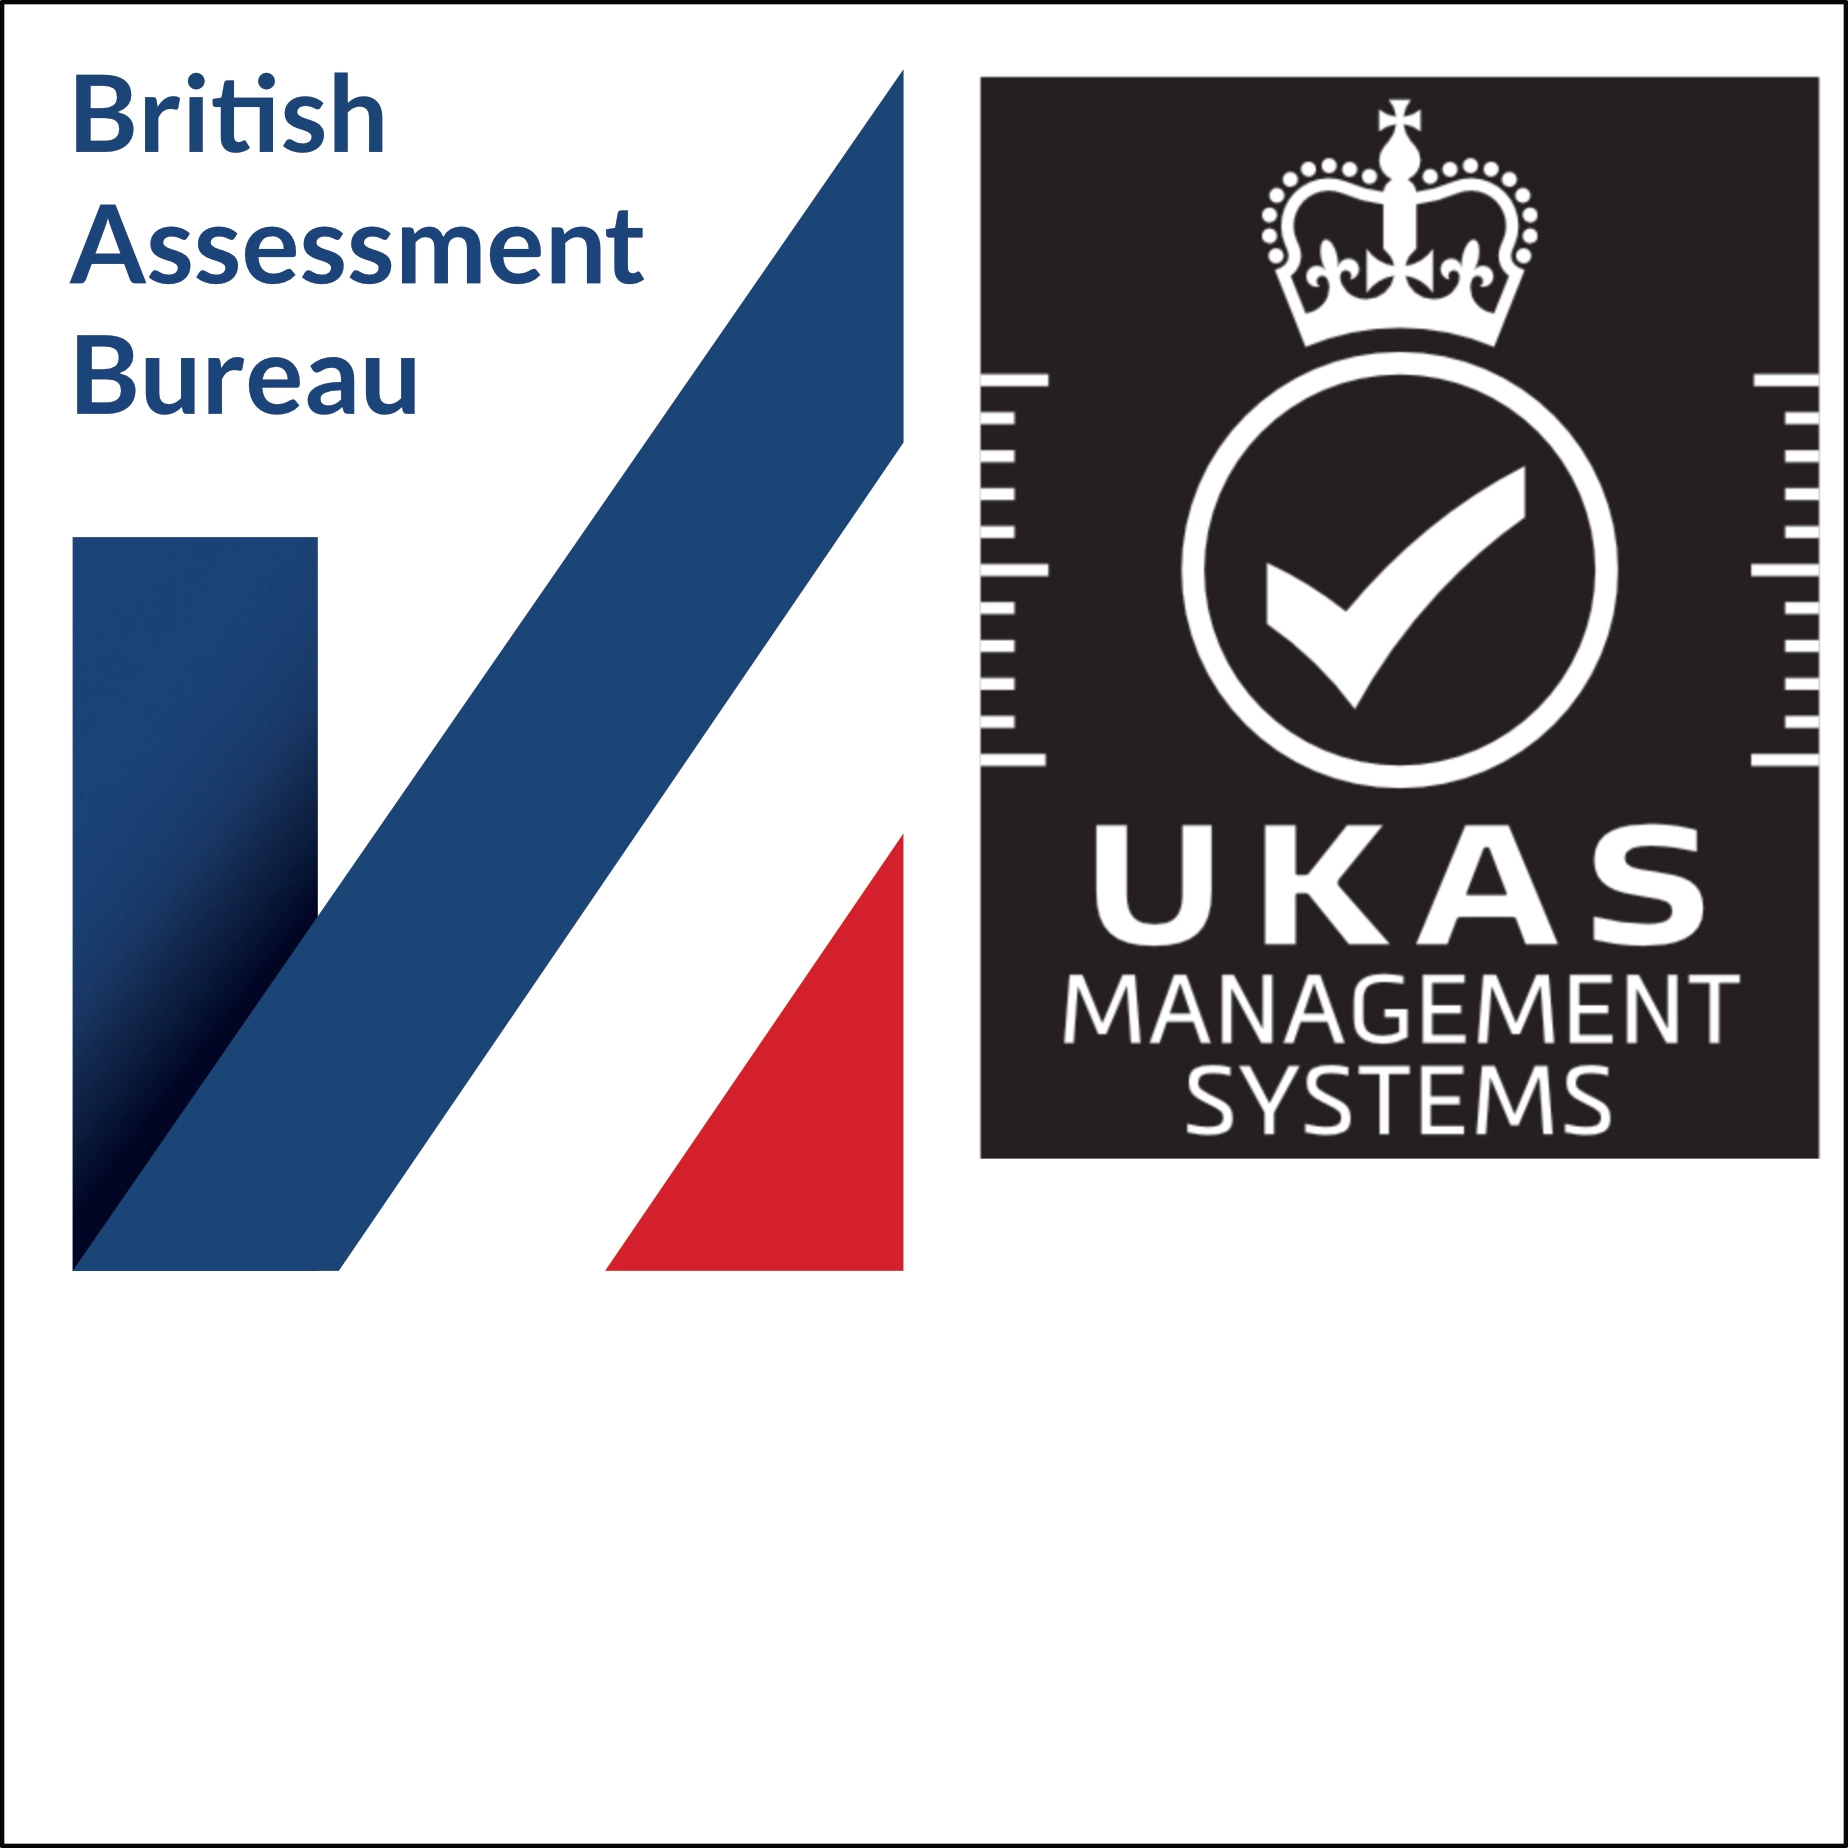 British Assessment Bureau and UKAS Management System logos. ISO 9001 Quality Management